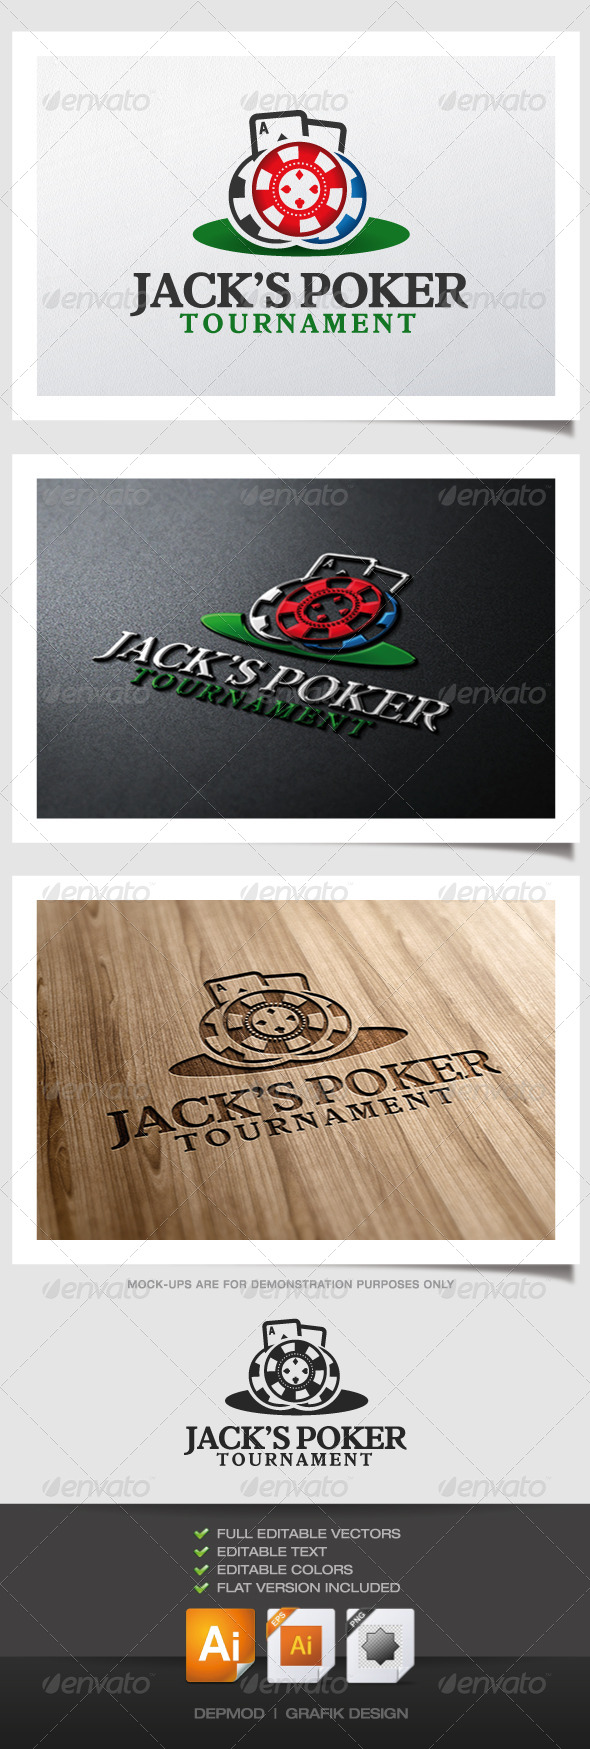 Jack's Poker Tournament